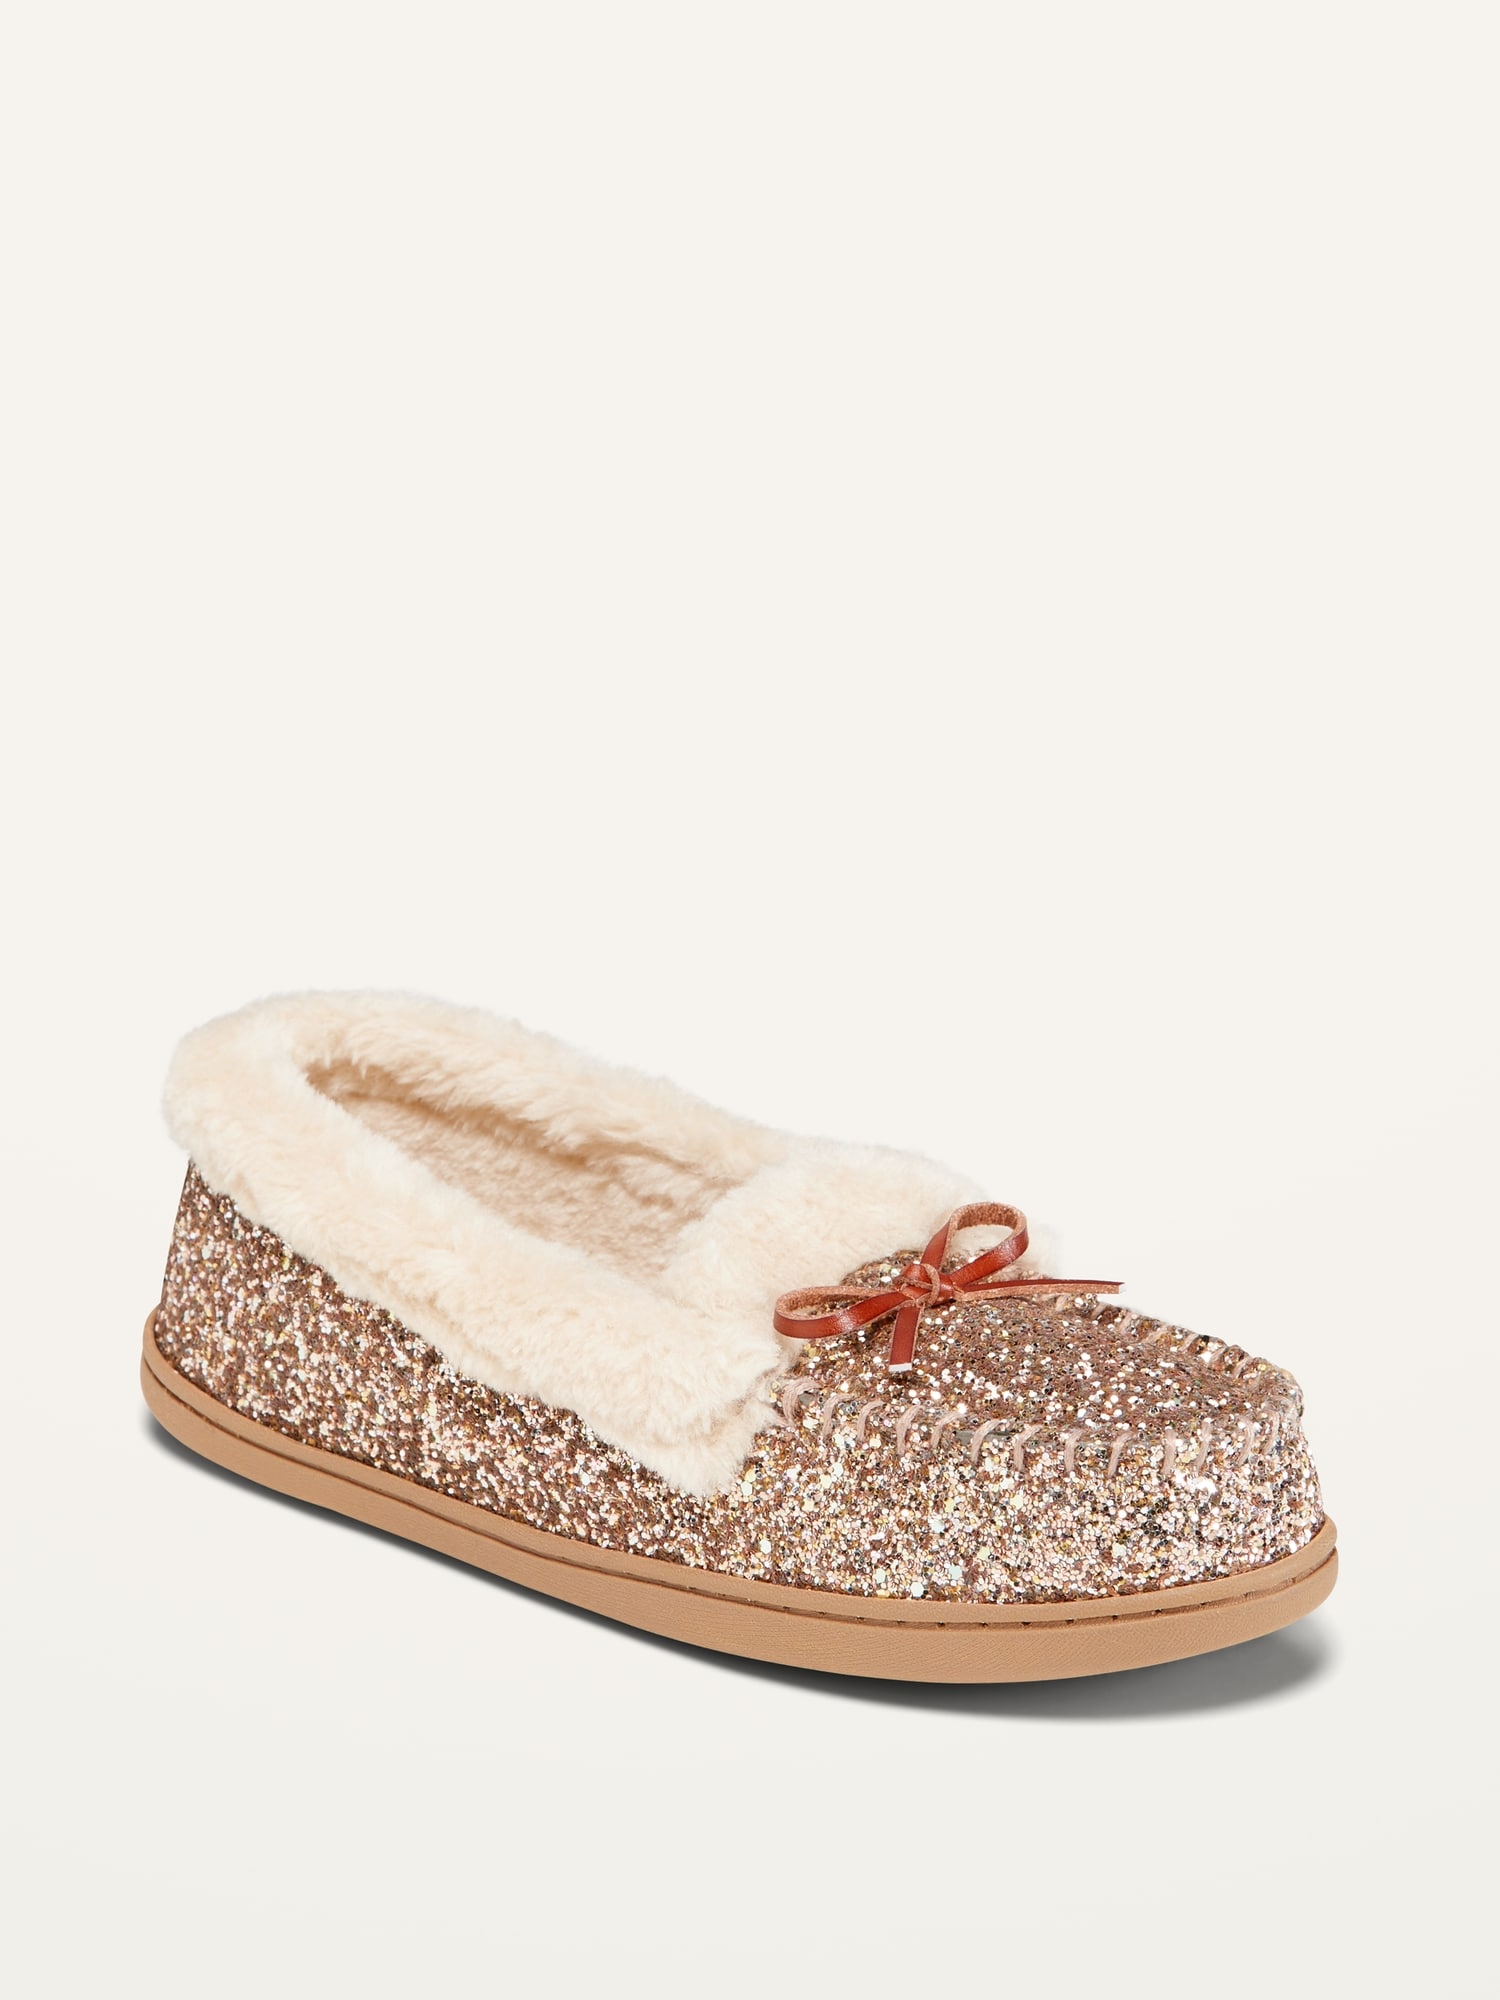 glitter moccasin slippers